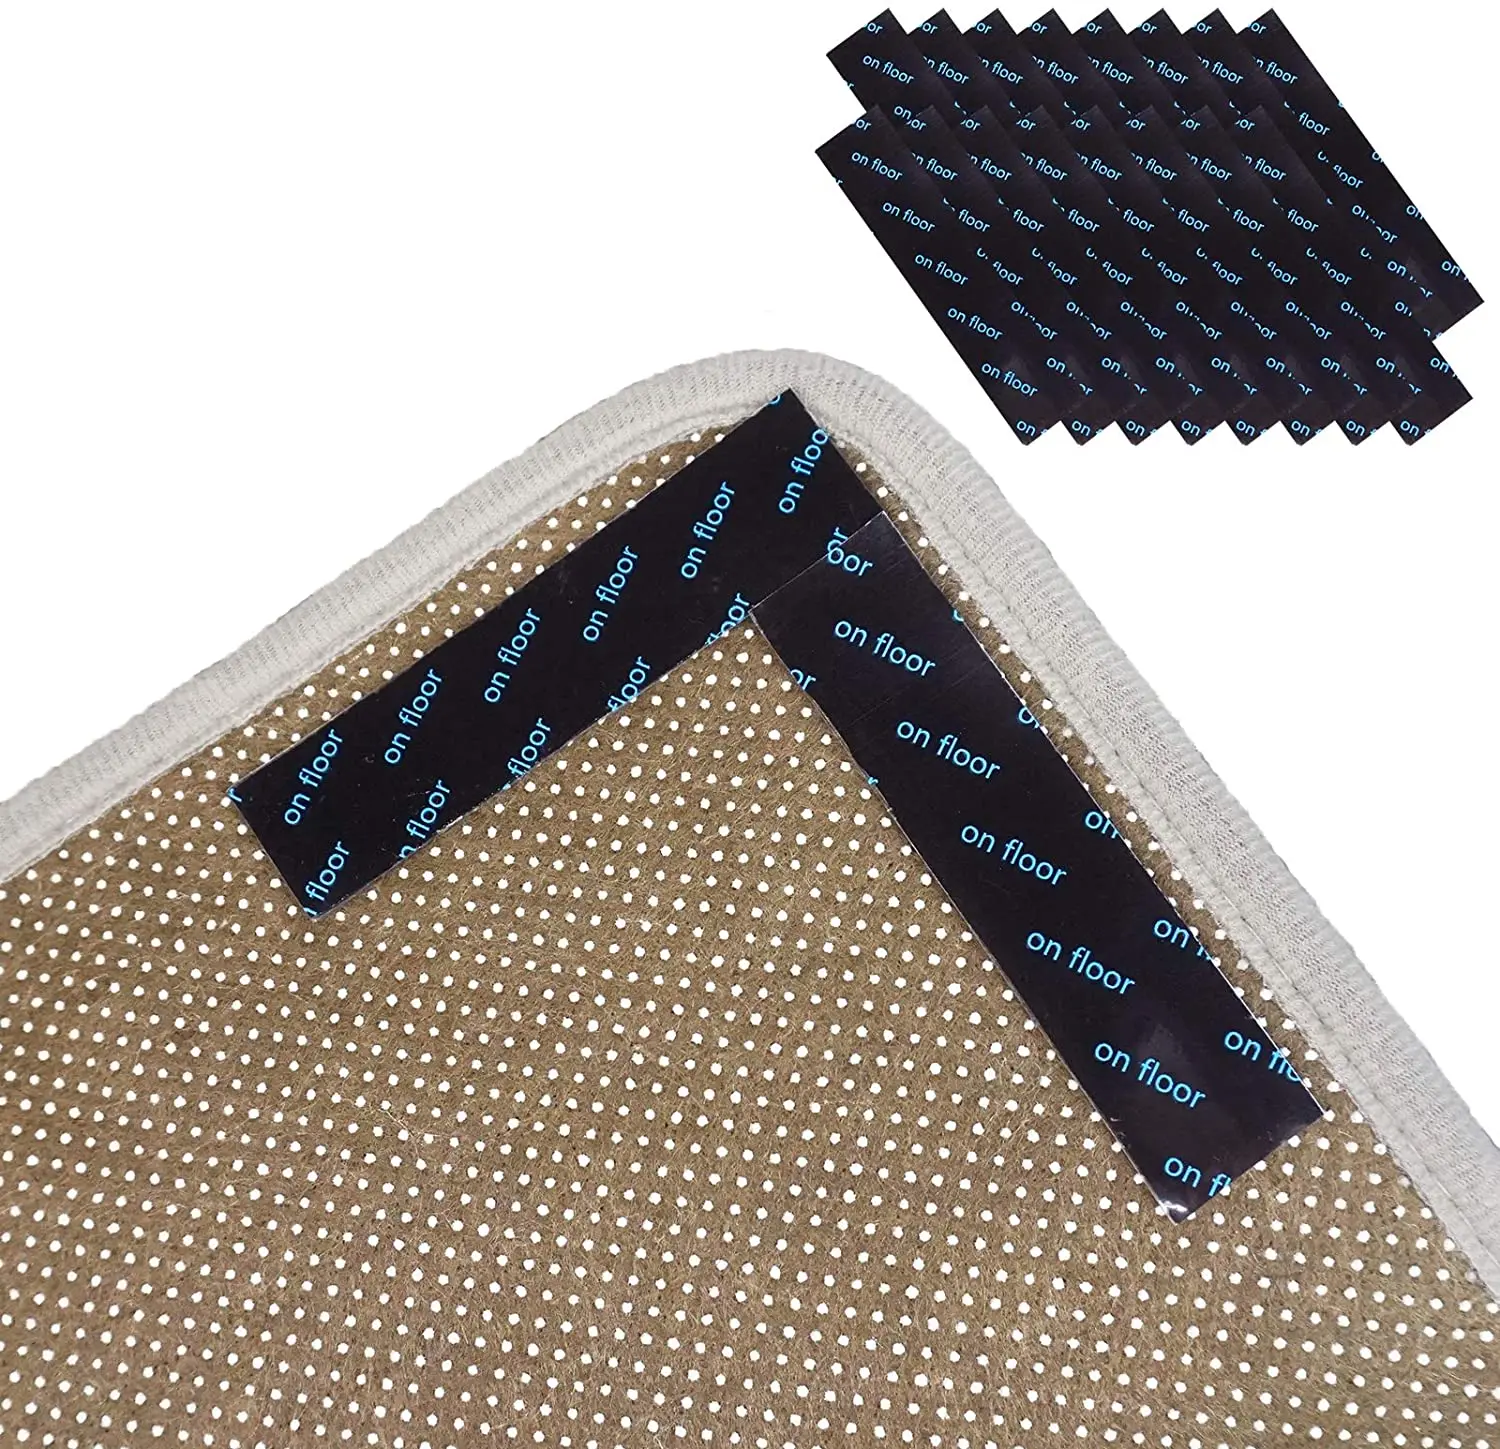  12PCS Non Slip Rug Grippers, Rug Pads Grippers, Rug Tape Anti  Slip Carpet Pads Rug Corner Gripper for Hardwood Floors/Tile/Mats/Keep Area  Rugs Flat and Easily Peel Off (Black) : Home 